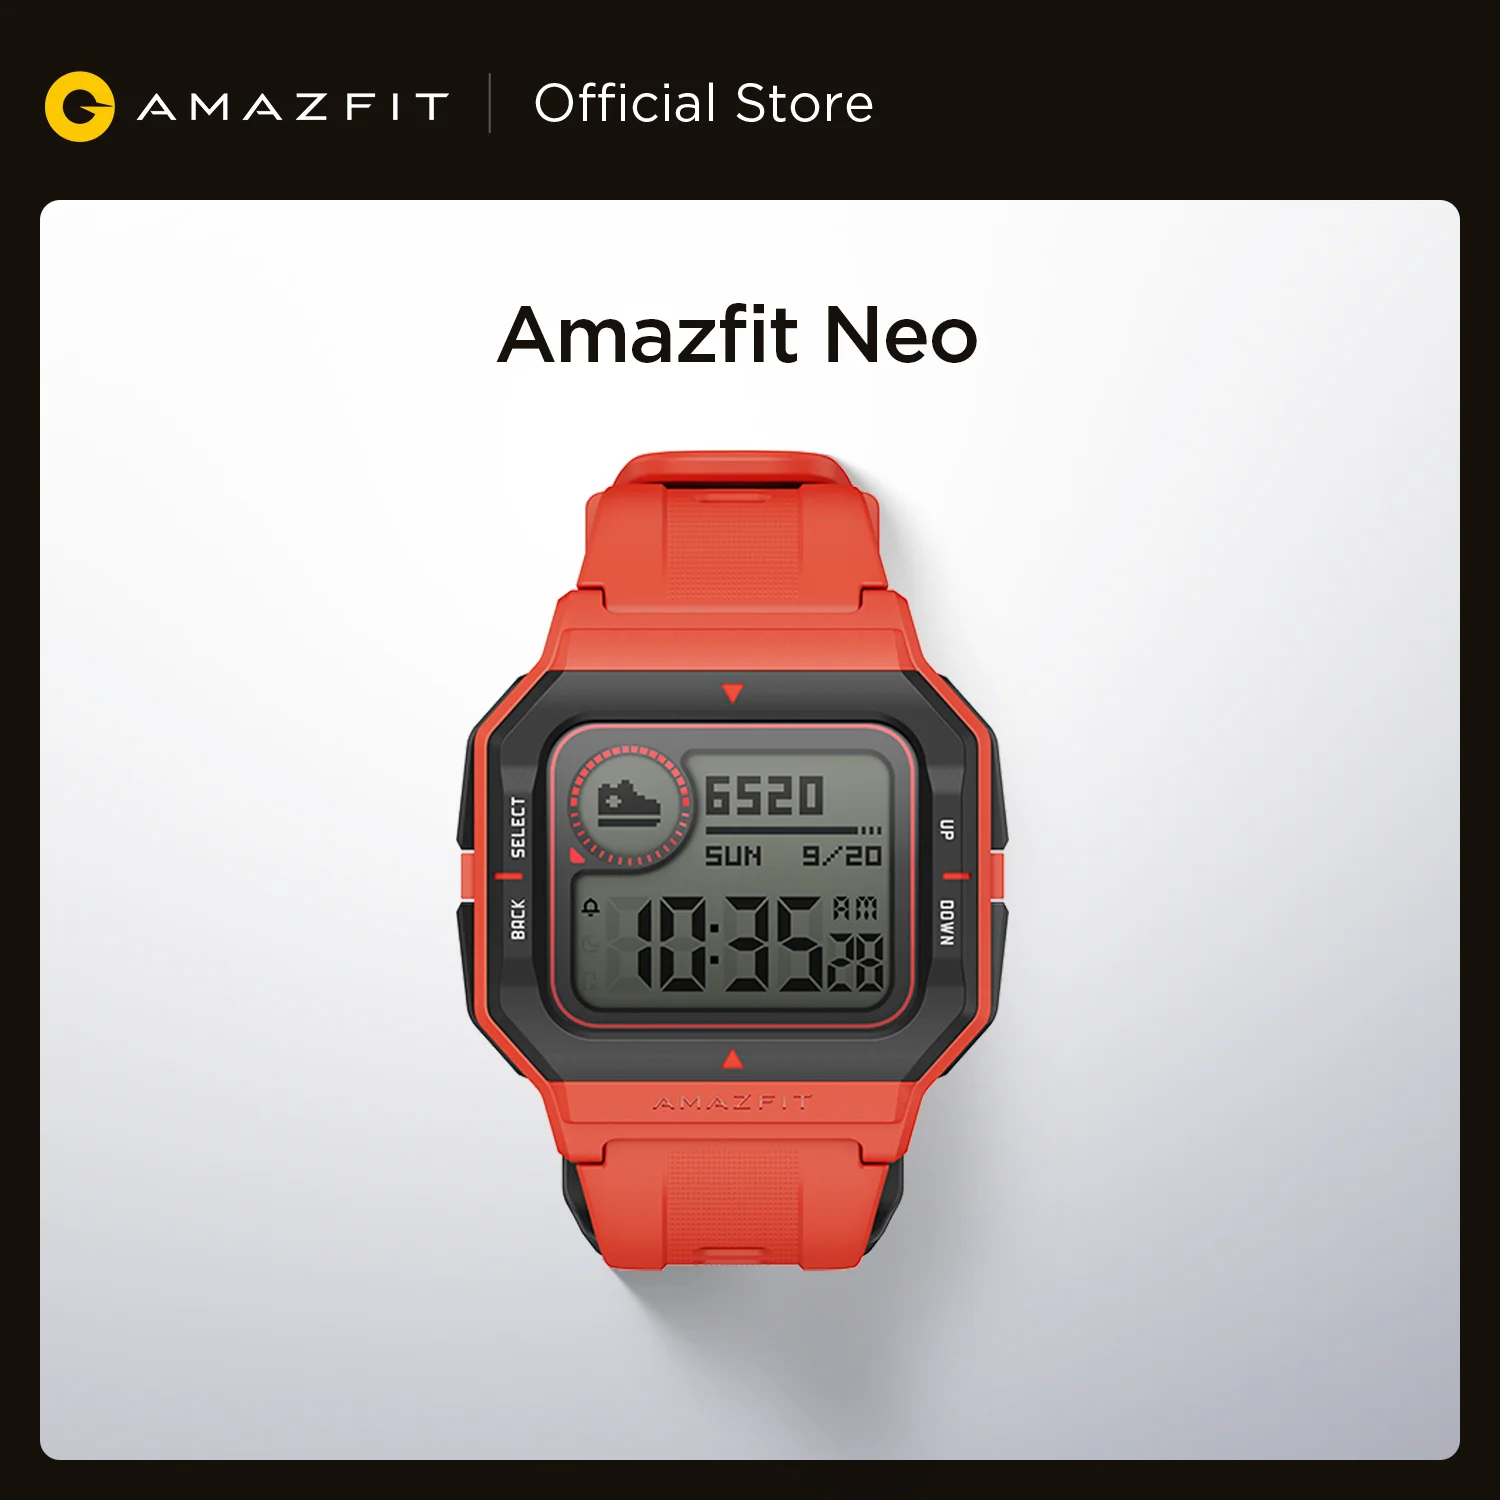 Amazfit Smartwatch modelo Neo, dispositivo con batería con autonomía de 28 días, Bluetooth, 3 modos deportivos, medición del ritmo cardíaco, resistente a 5 ATM, ideal para Android IOS, Aliexpress China.